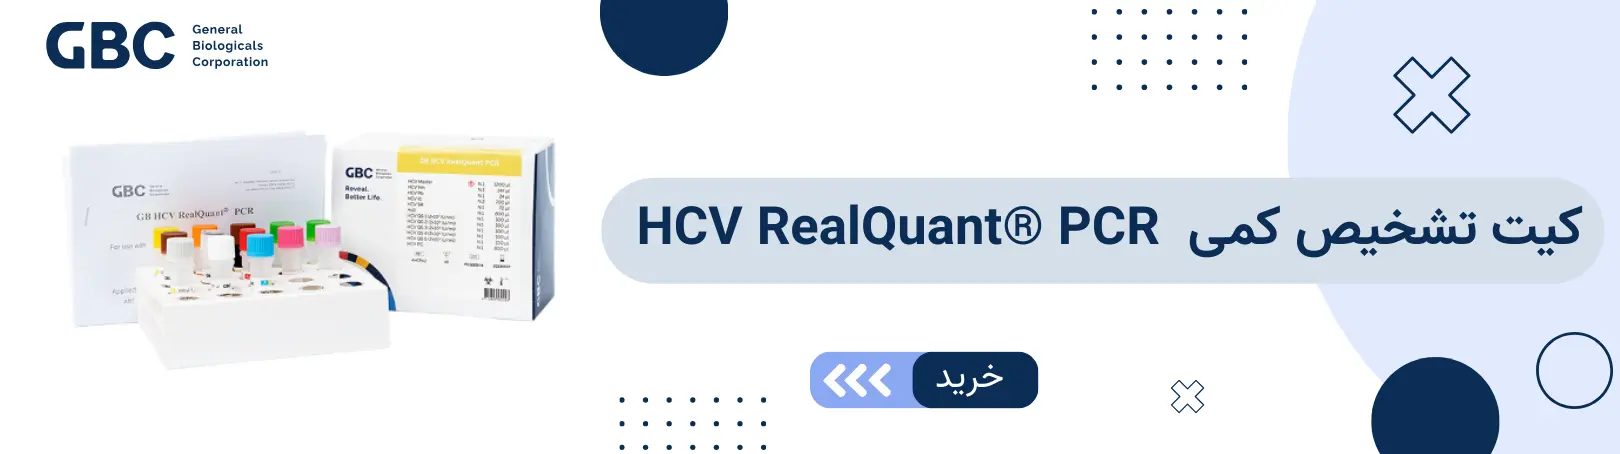 HCV RealQuant PCR